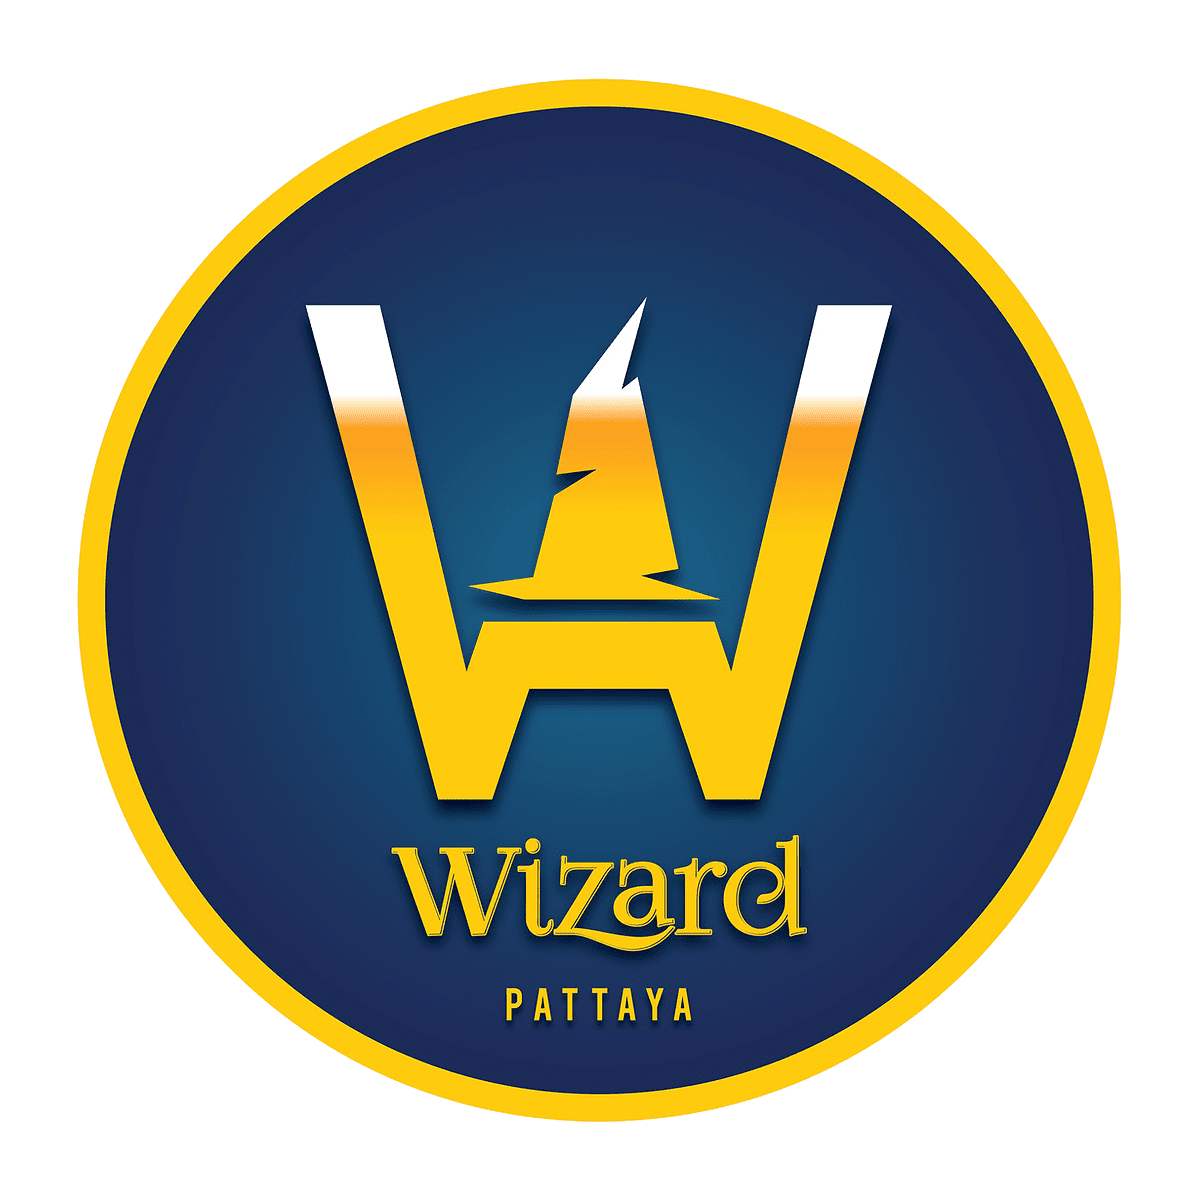 Wizard beer logo Thailand